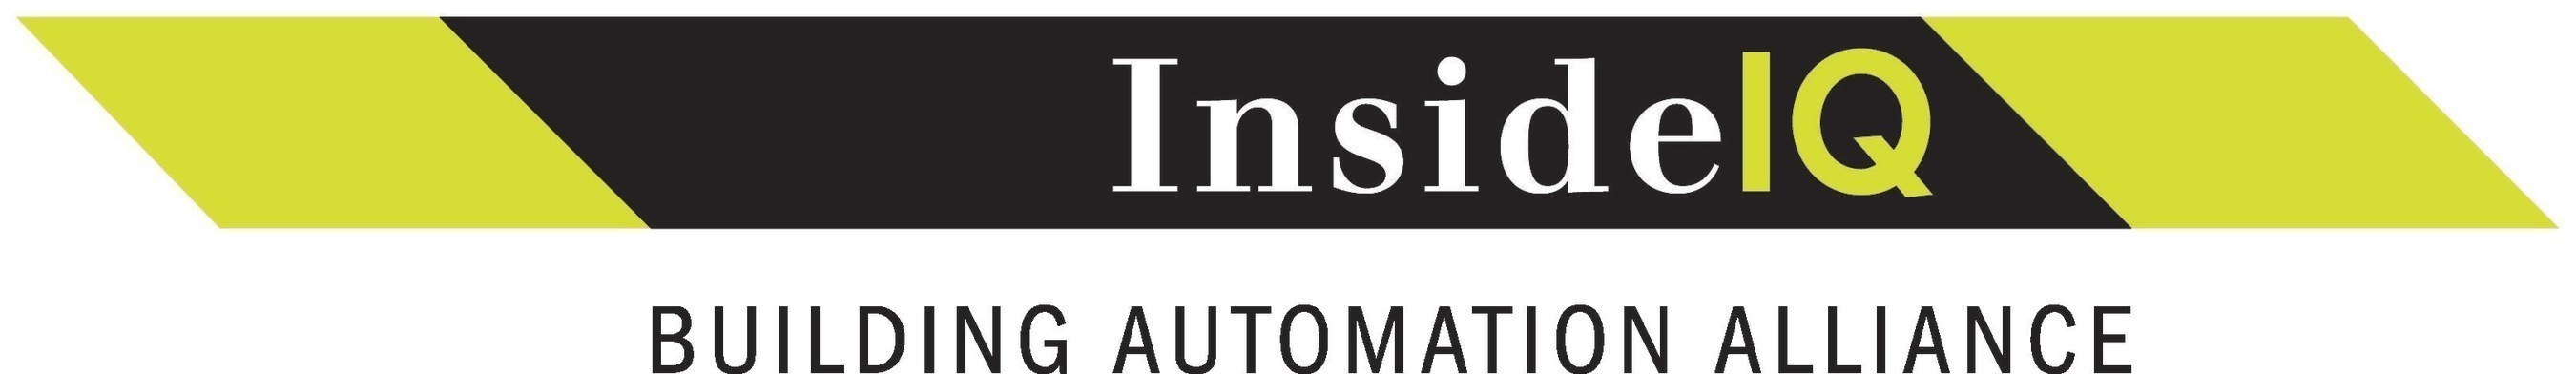 InsideIQ Building Automation Alliance Logo.